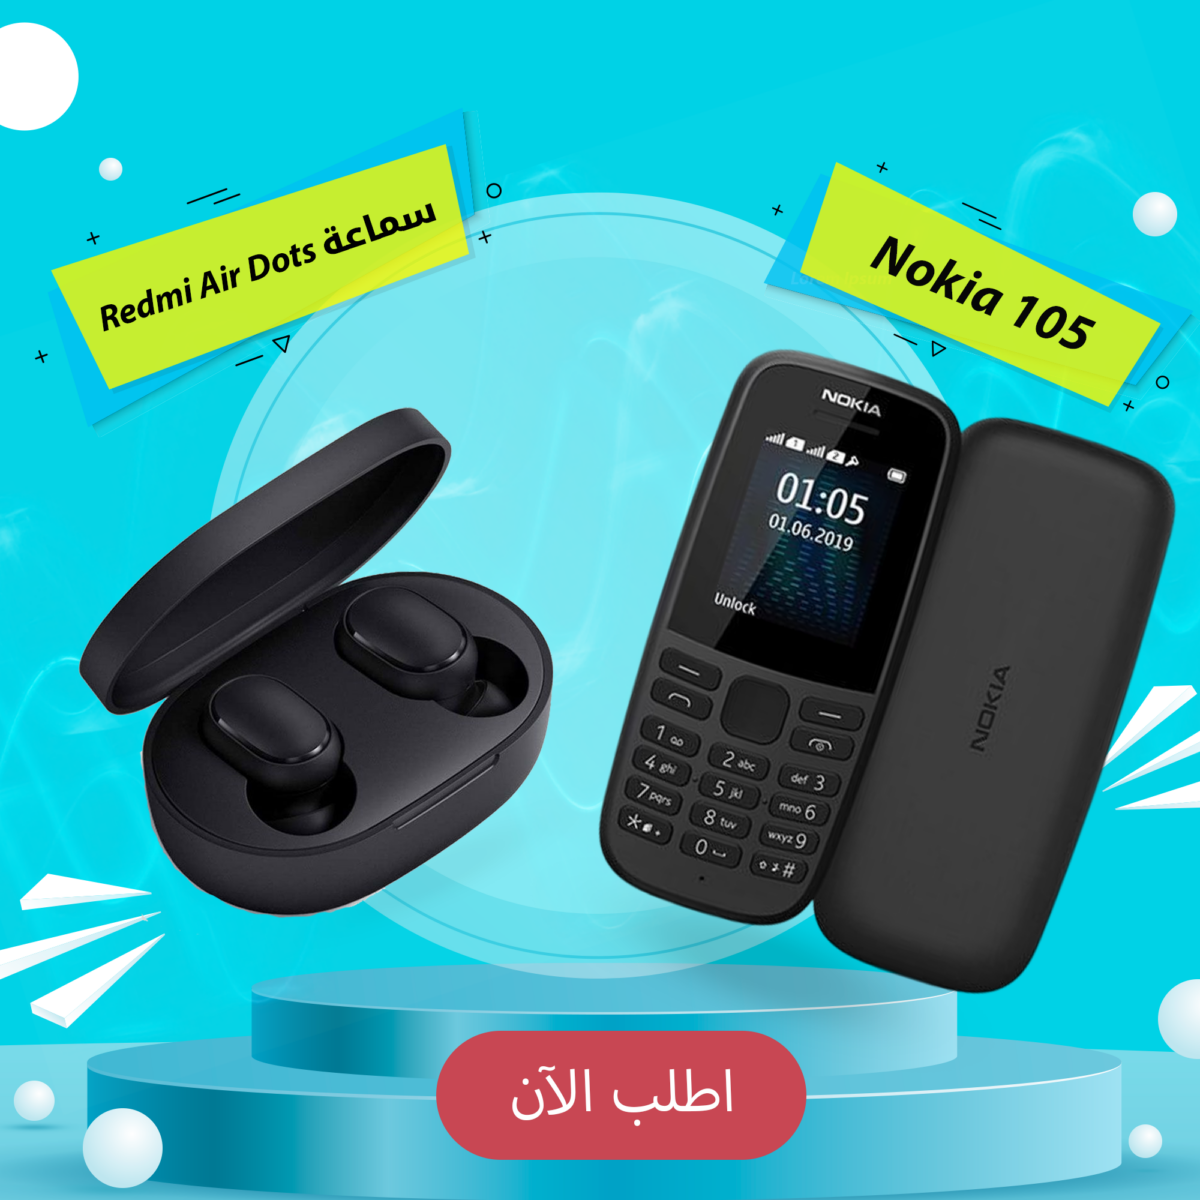 سماعة Redmi Air Dots + Nokia 105